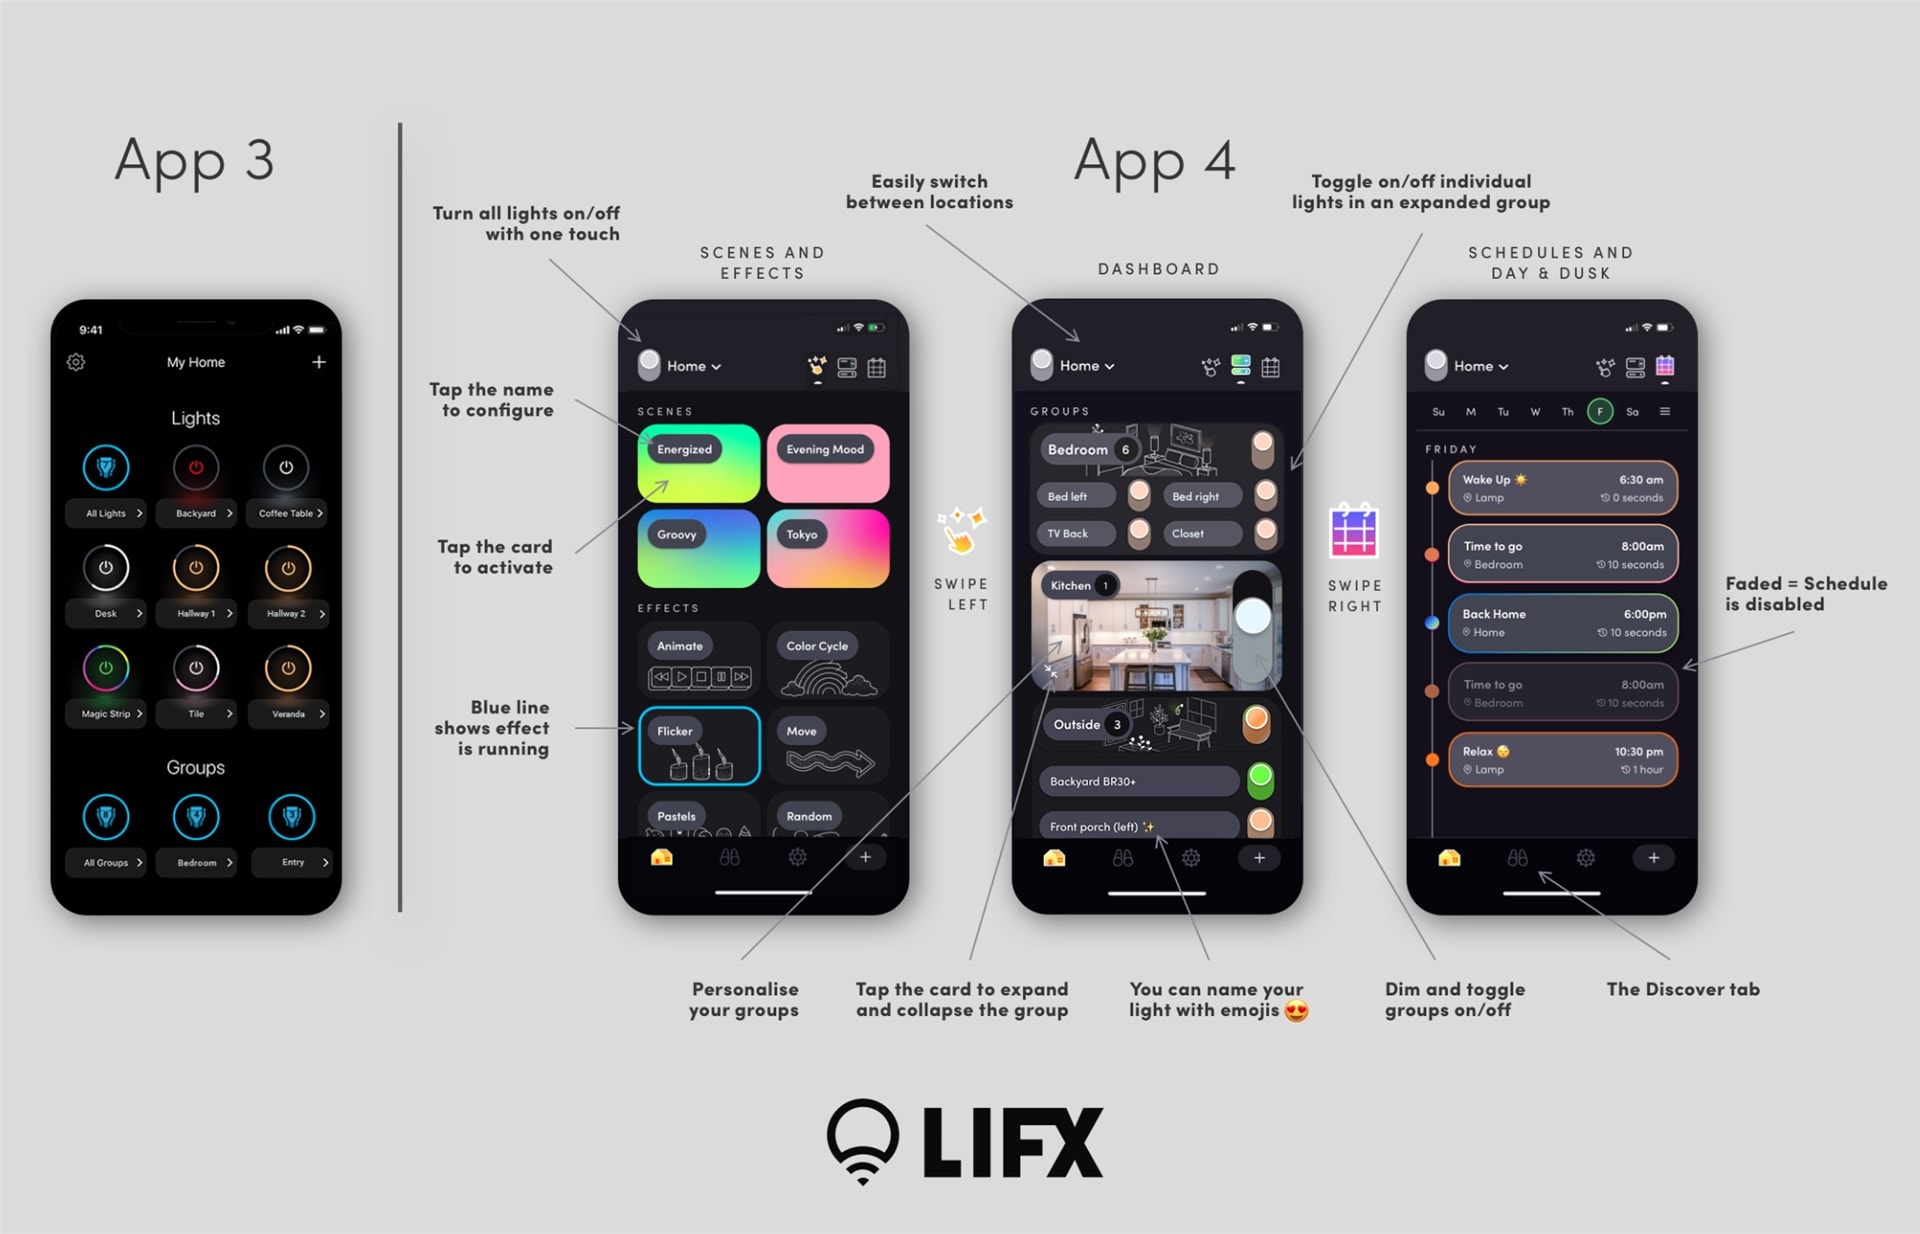 LIFX App 4